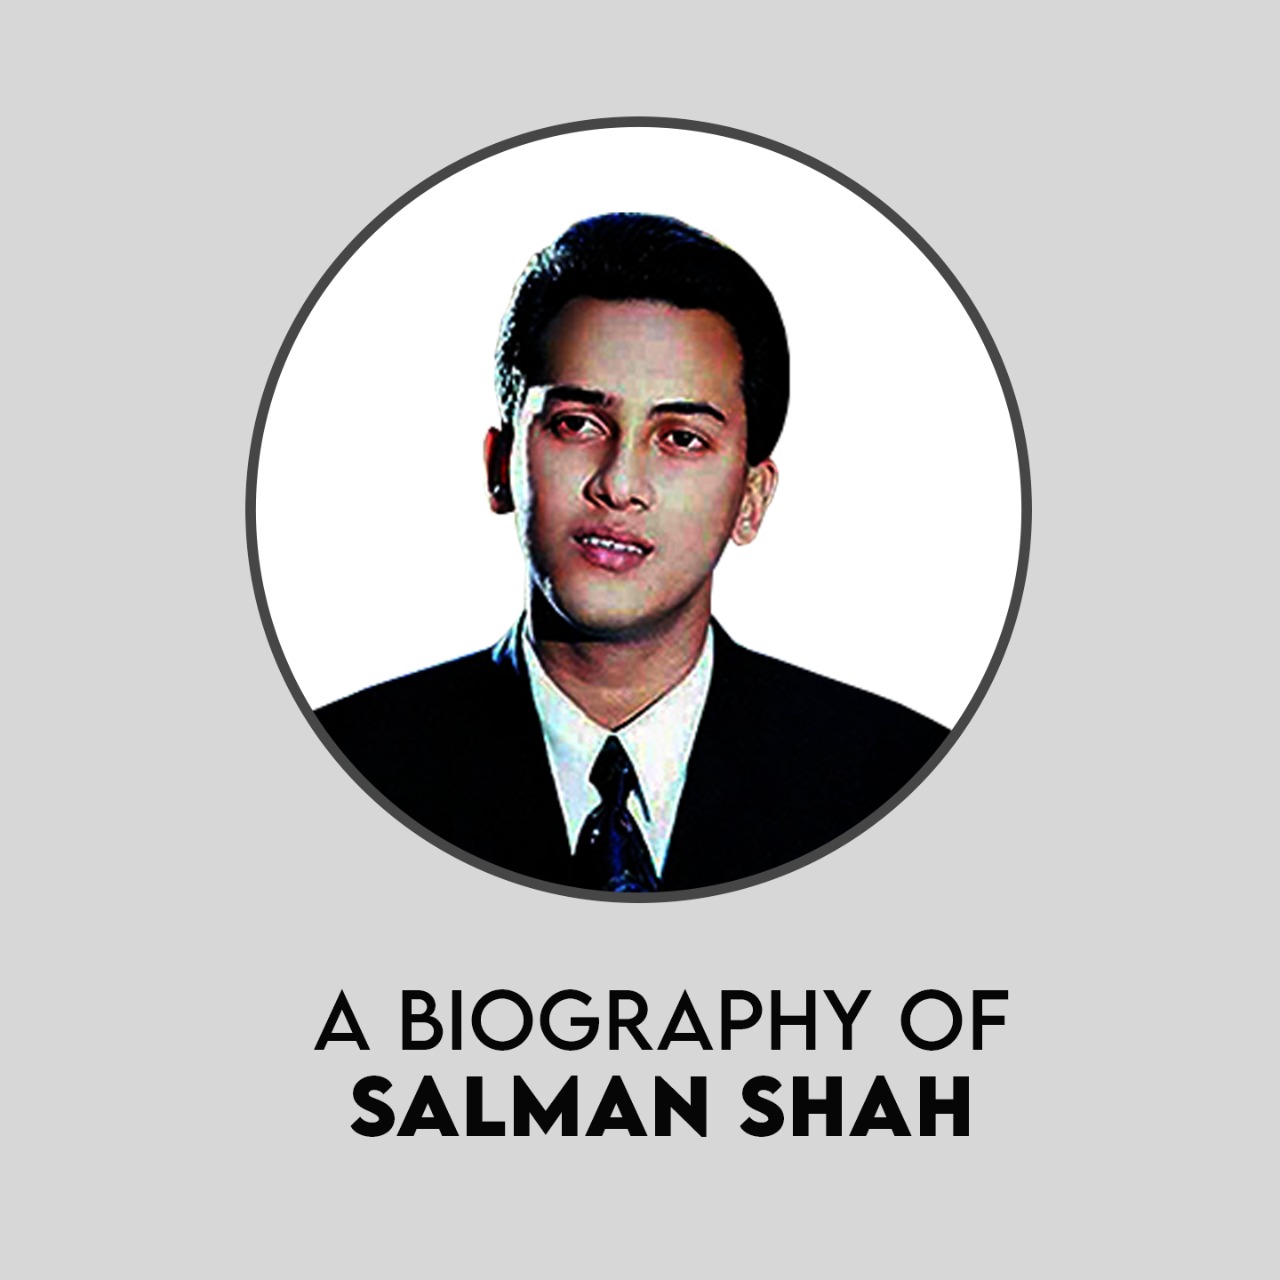 A BIOGRAPHY OF SALMAN SHAH